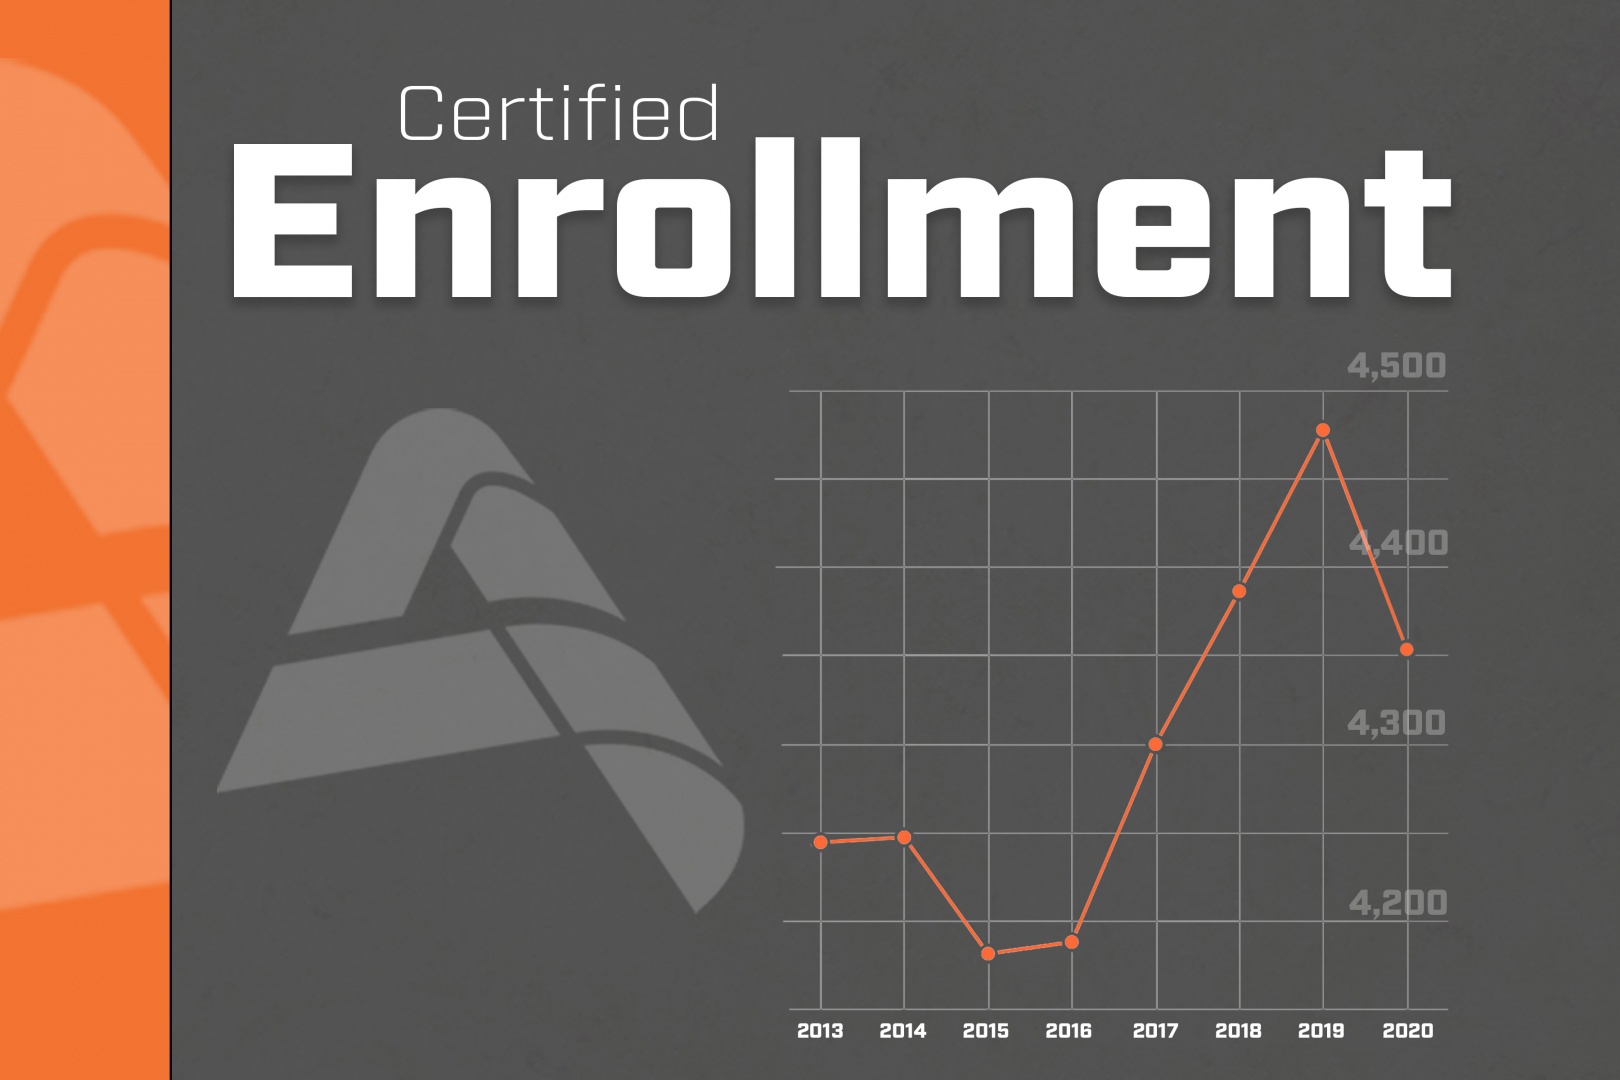 Certified Enrollment in Ames 2020